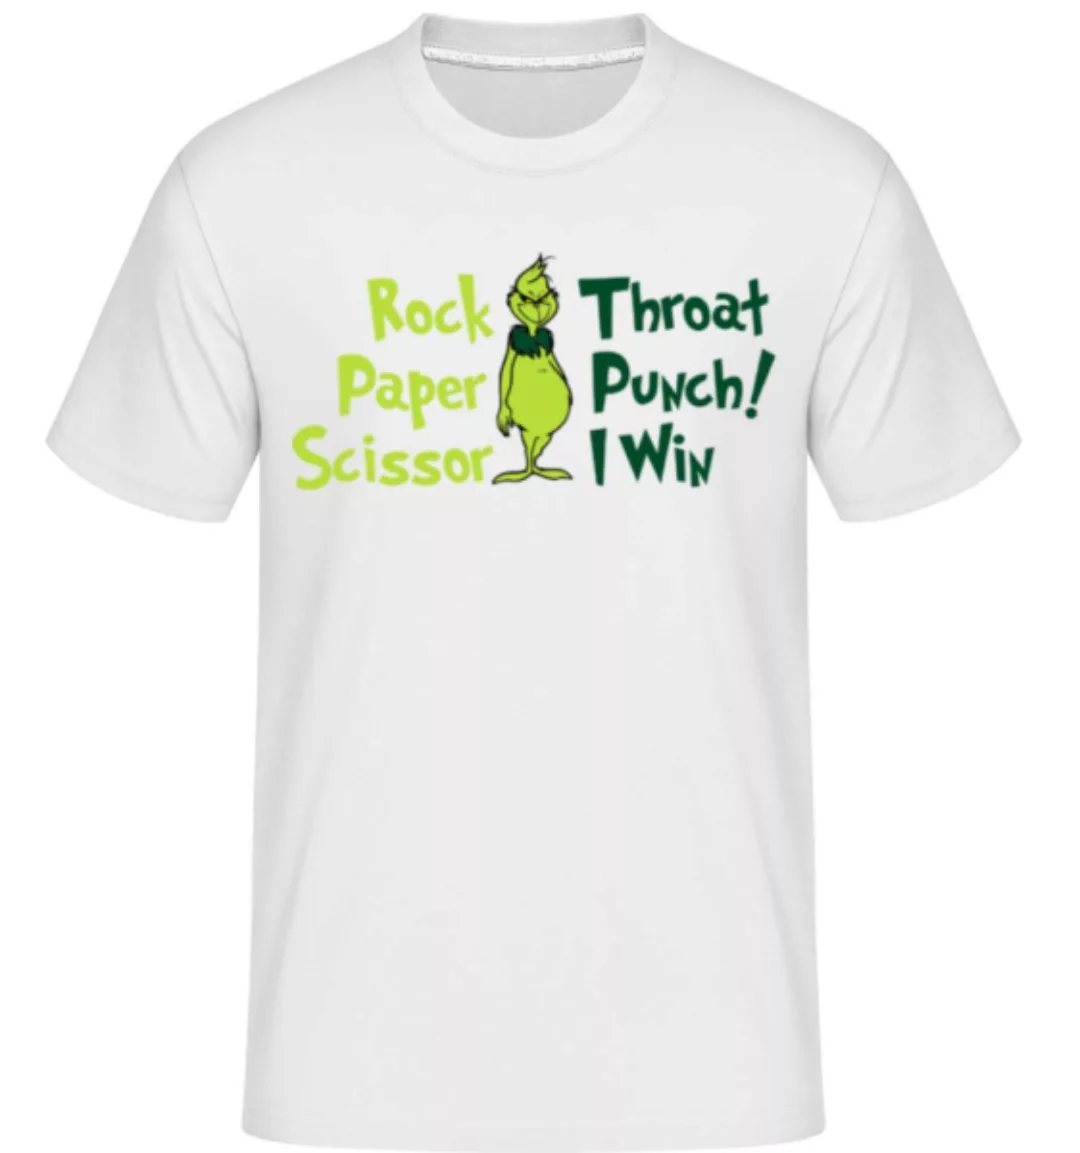 Rock, Paper, Scissor, Throat Punch! · Shirtinator Männer T-Shirt günstig online kaufen